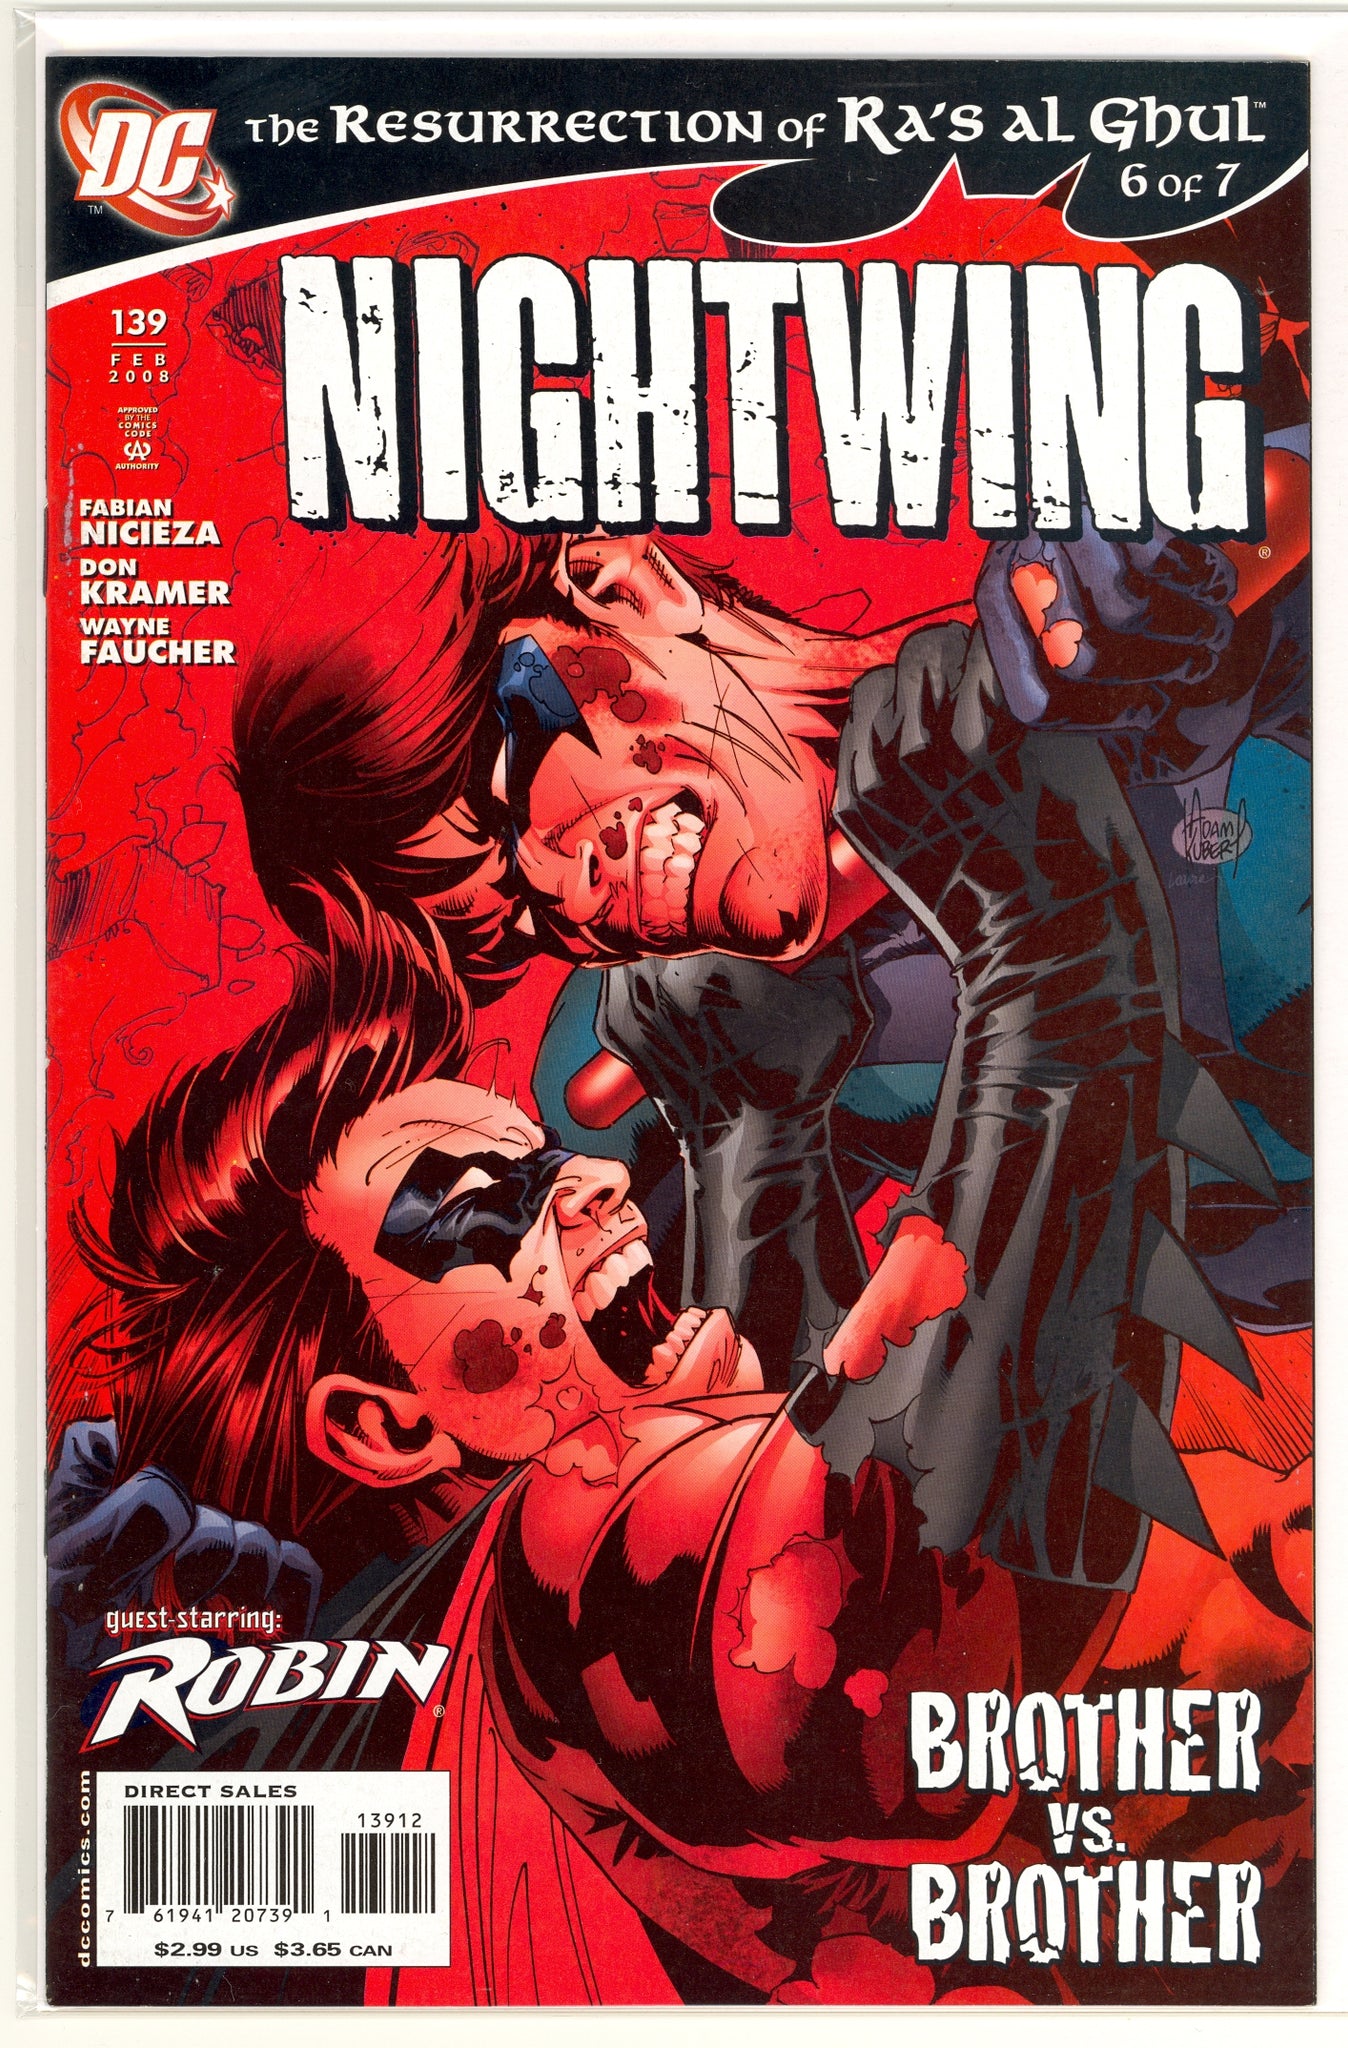 Nightwing #139 (2008) - 2nd printing - Resurrection of Ra's al Ghul part 6